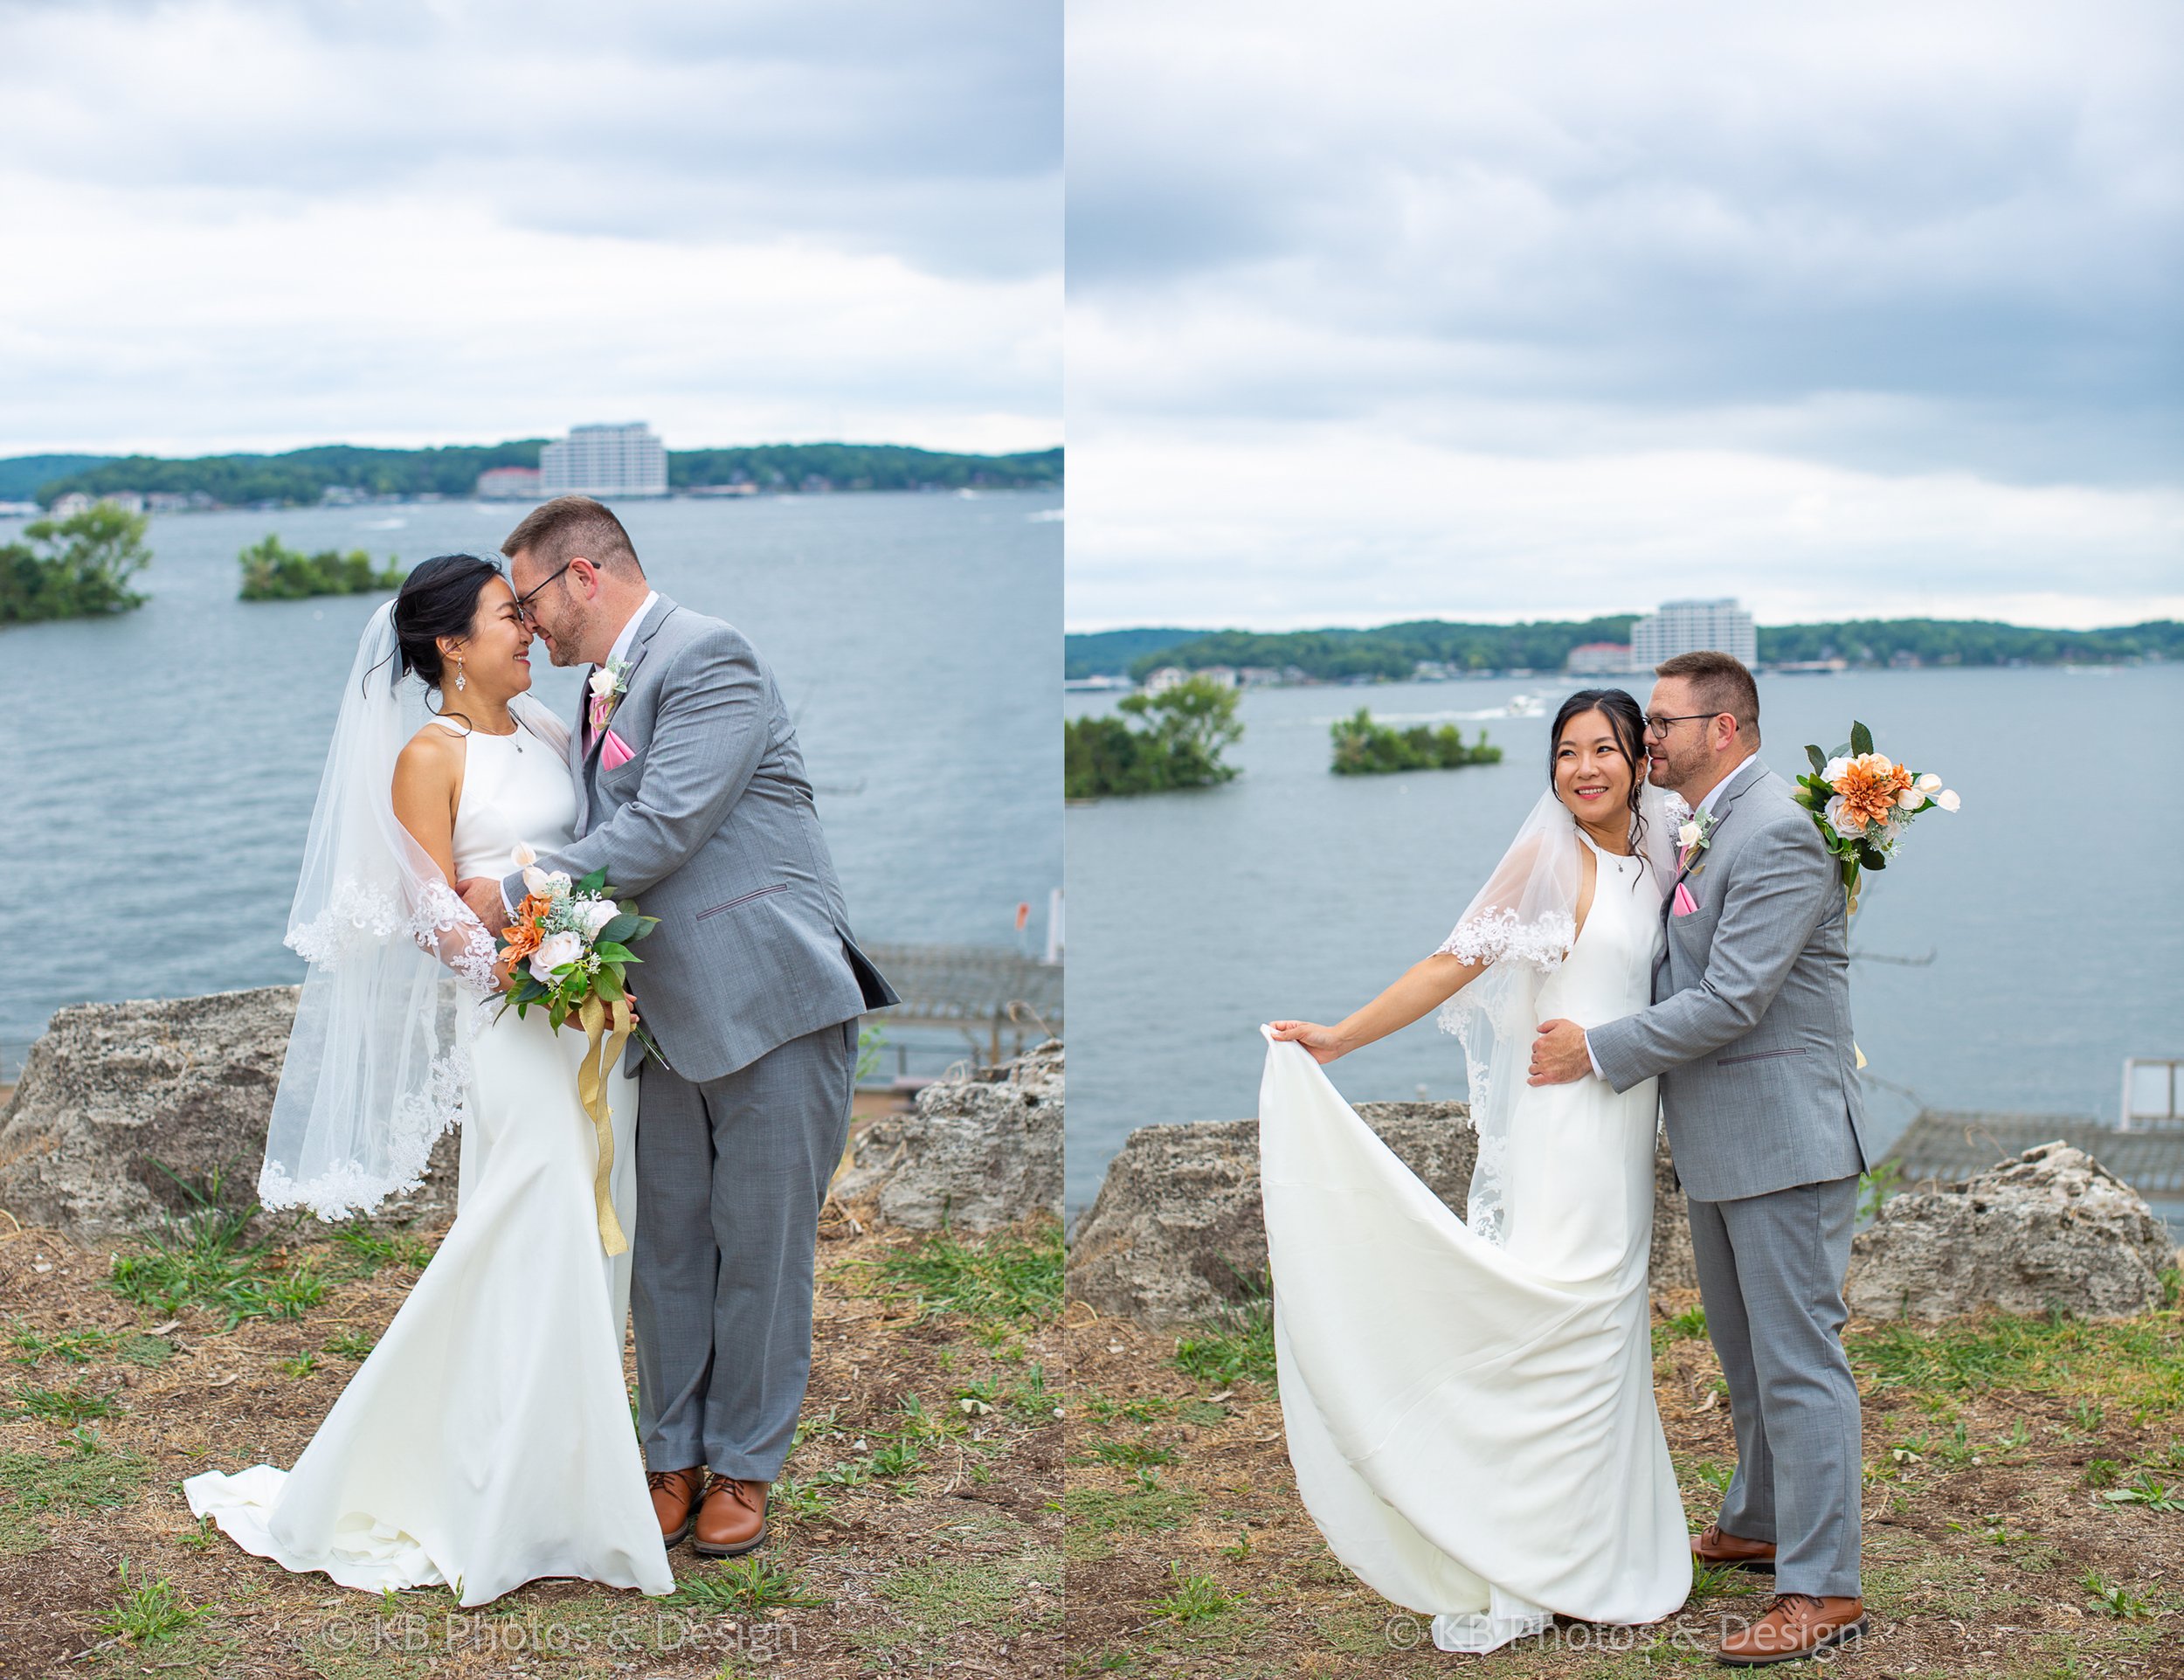 Wedding-Destination-Photography-Lake-of-the-Ozarks-Missouri-Nick_Irene-Jefferson-City-bride-groom-Lodge-of-Four-Seasons-wedding-photographer-KB-Photos-and-Design-414.jpg